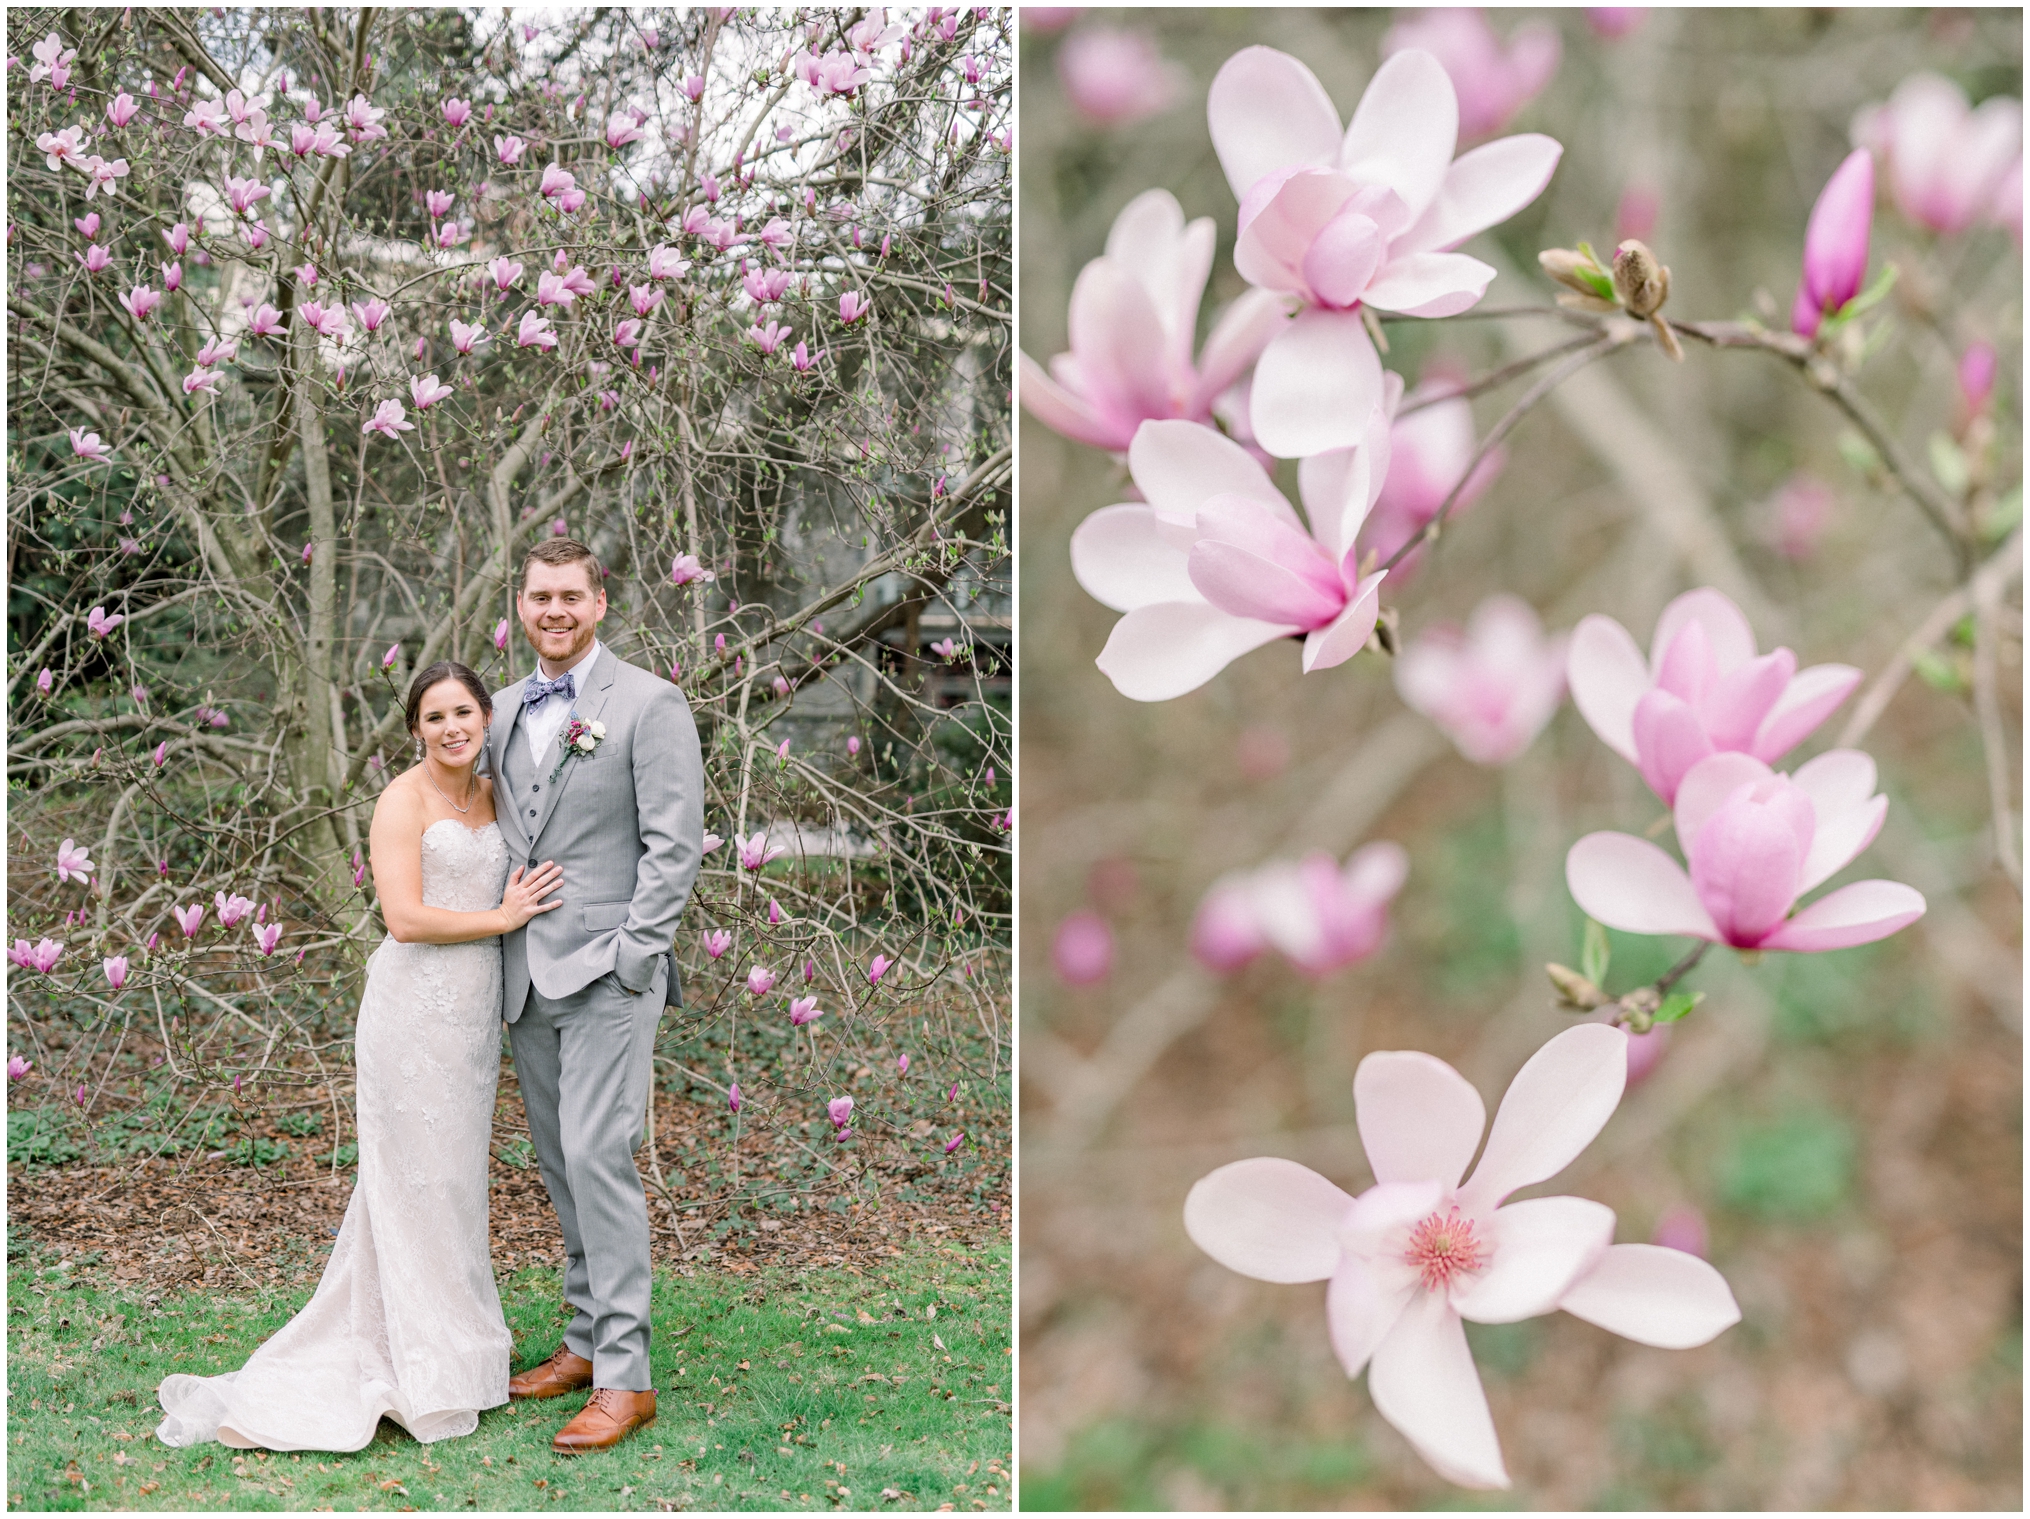 Krista Brackin Photography | April Wedding at The Carriage House at Rockwood Park_0087.jpg